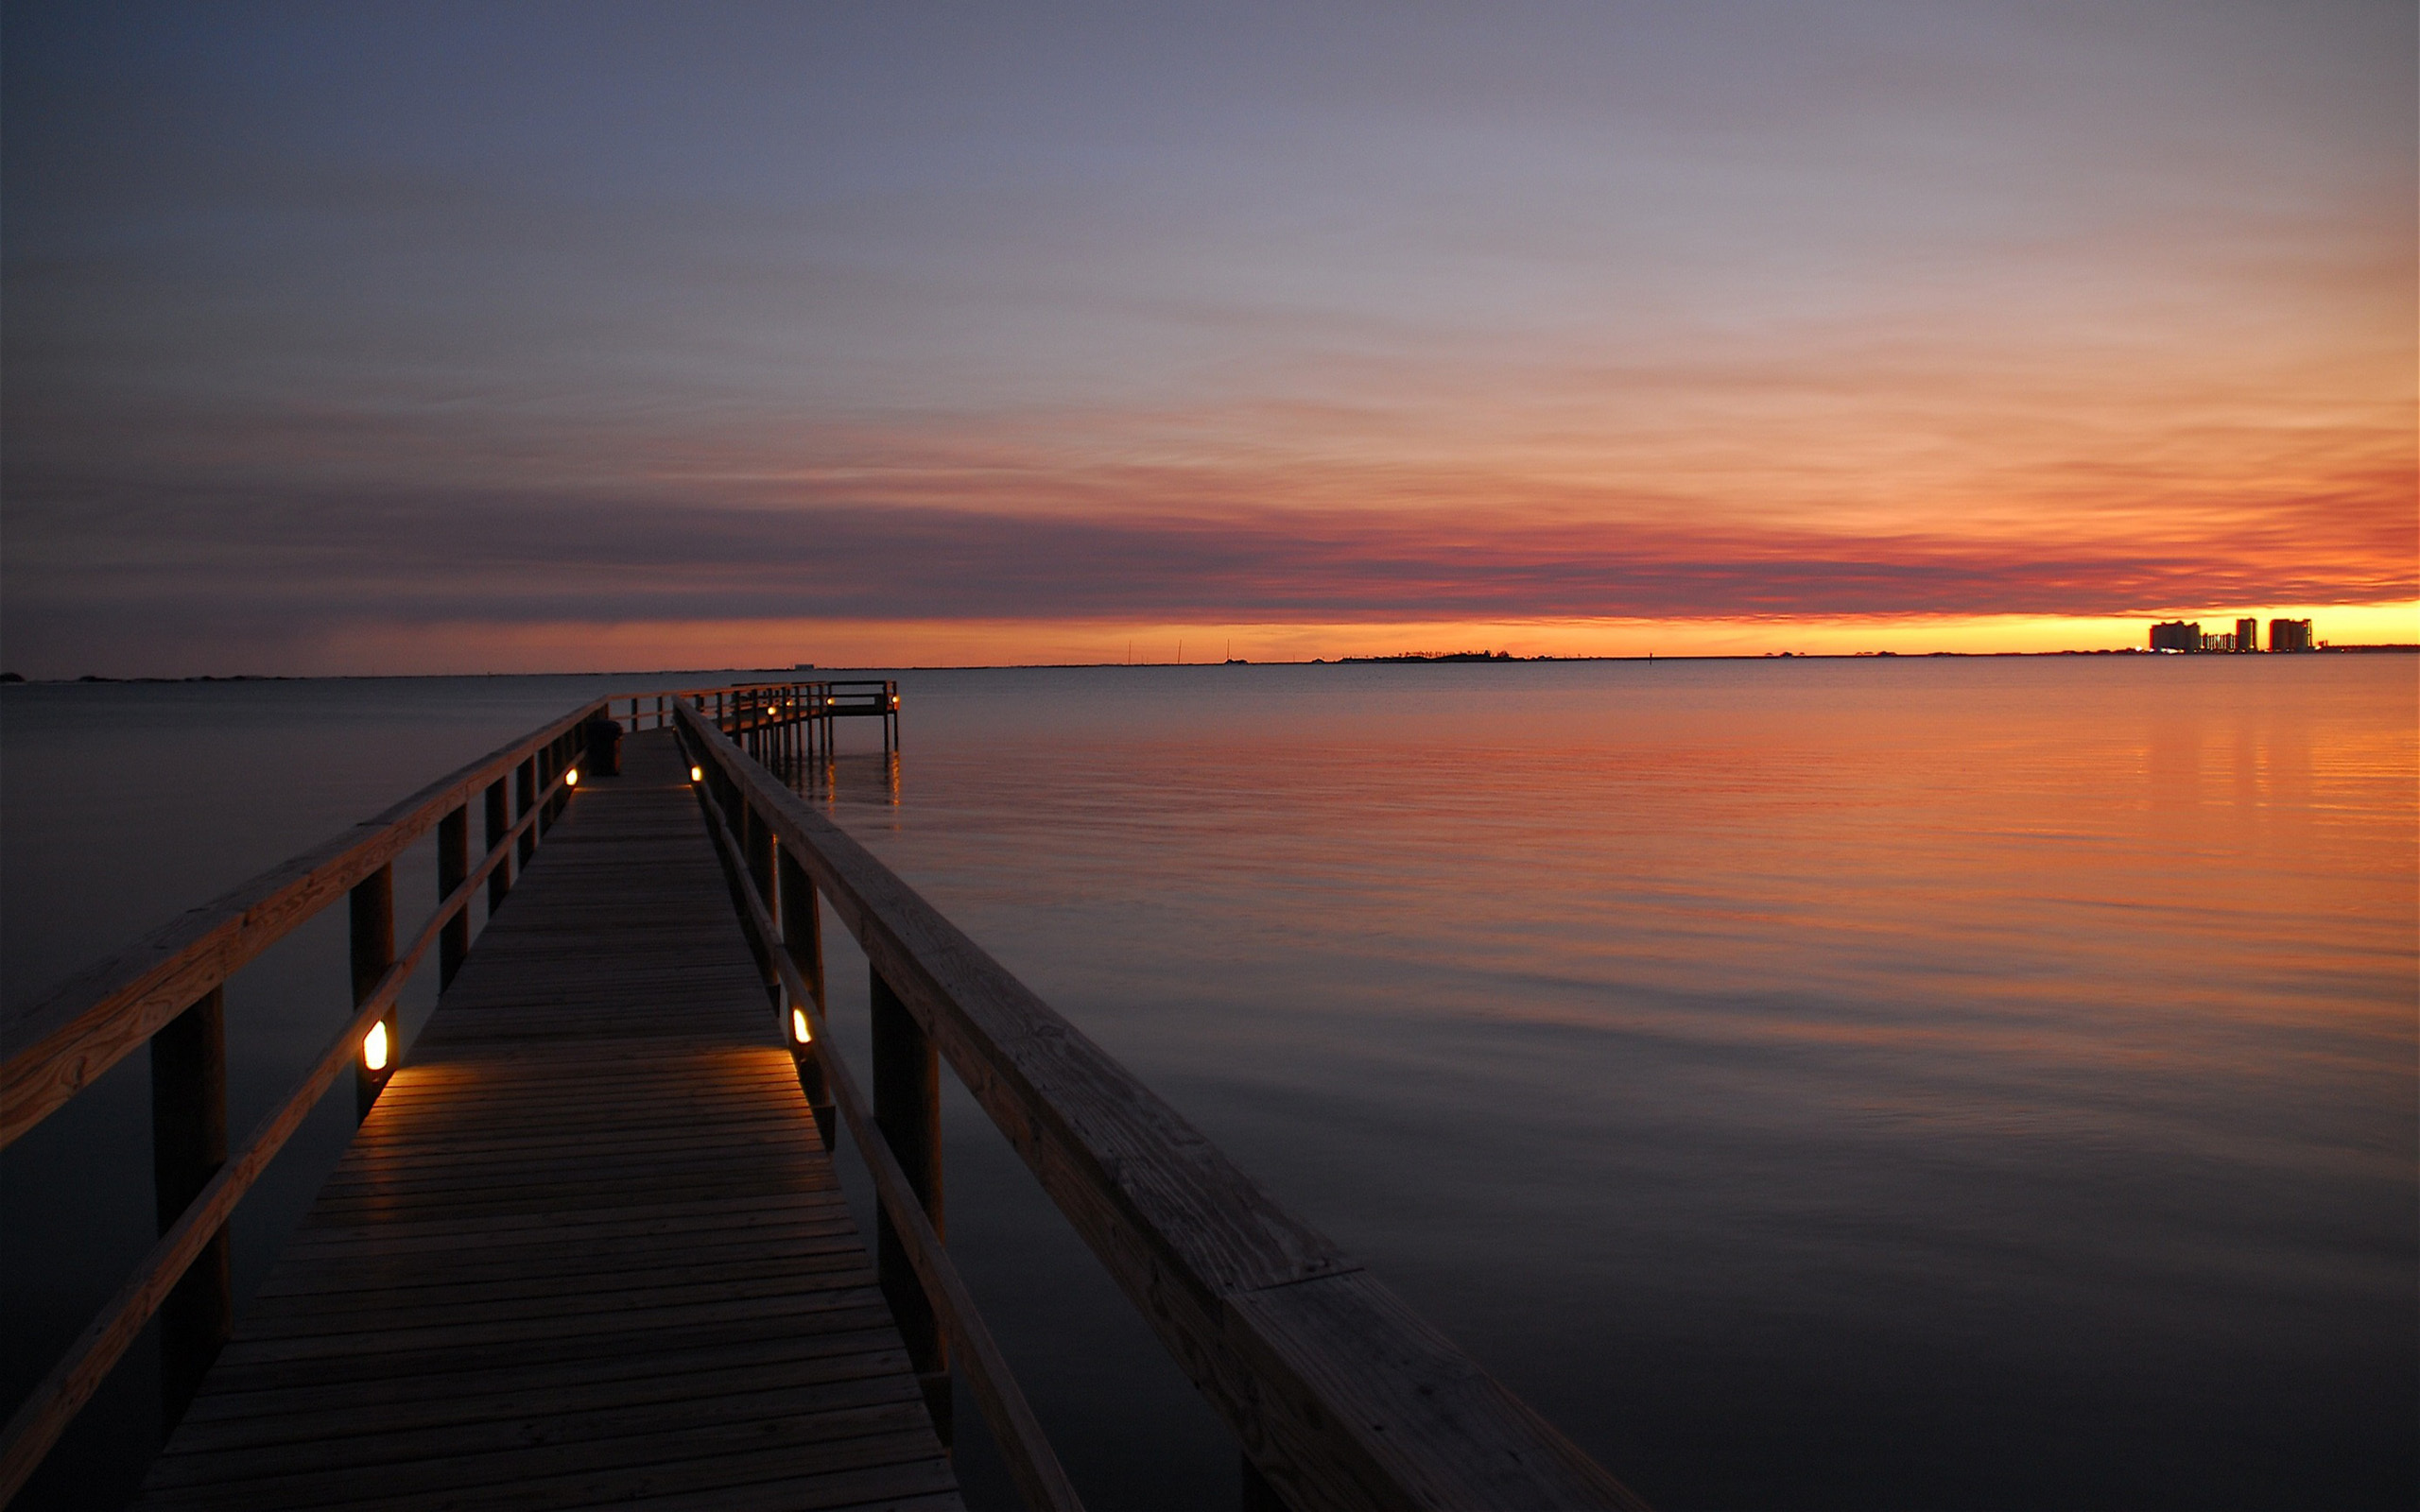 Вечер. Пирс на финском заливе. Пристань на закате. Красивый вид закат. Канонерский остров закат.